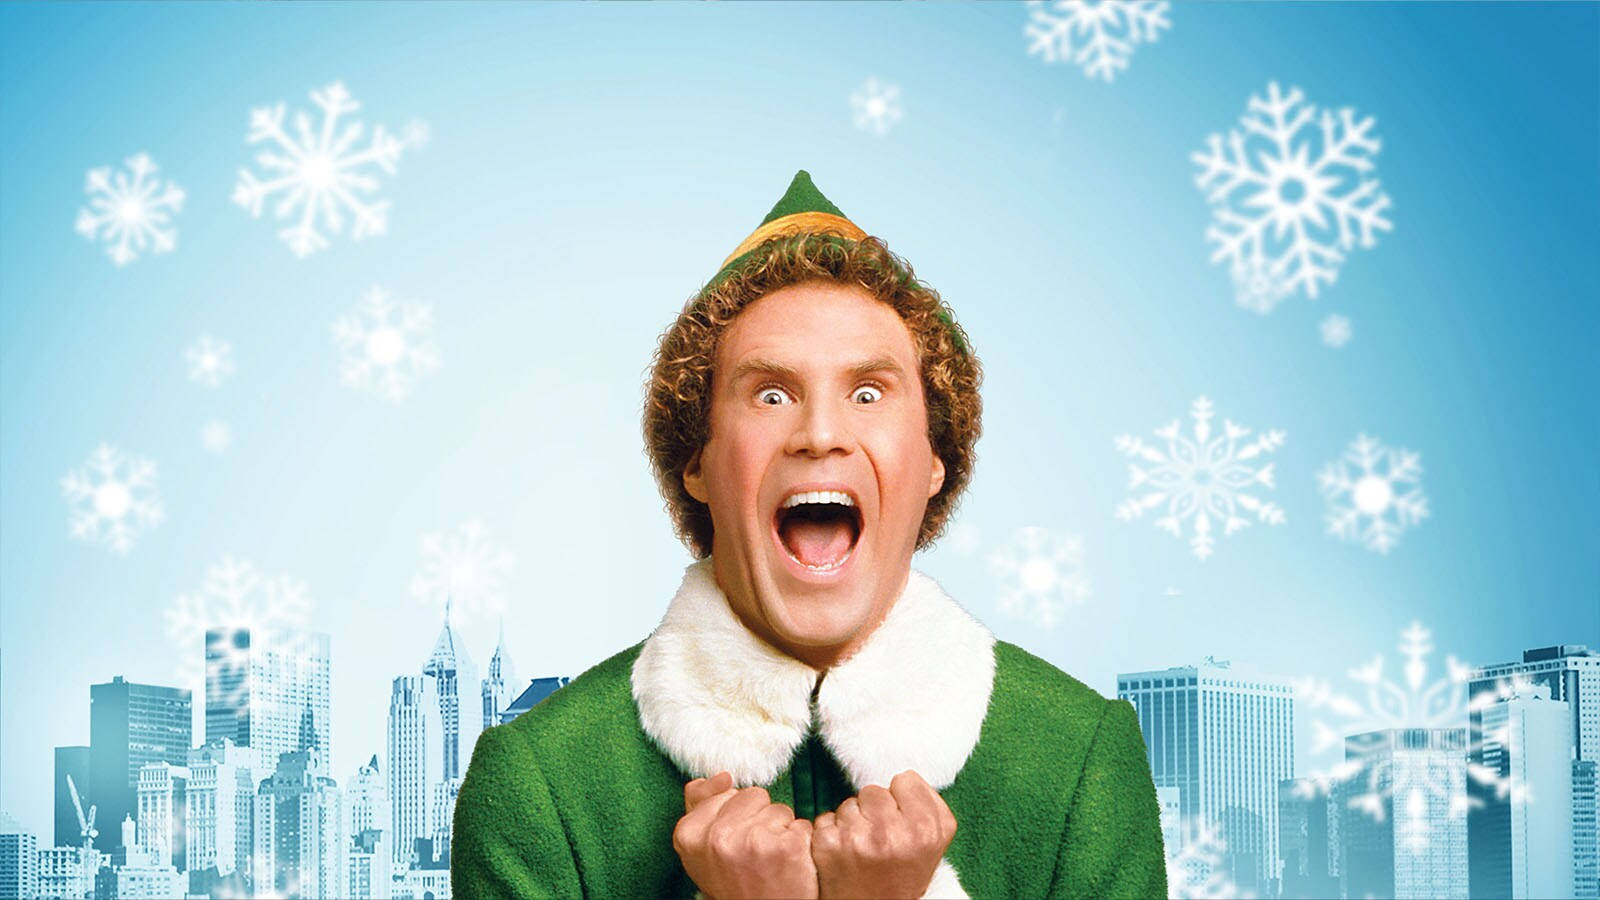 The Elf - A Christmas Movie Wallpaper